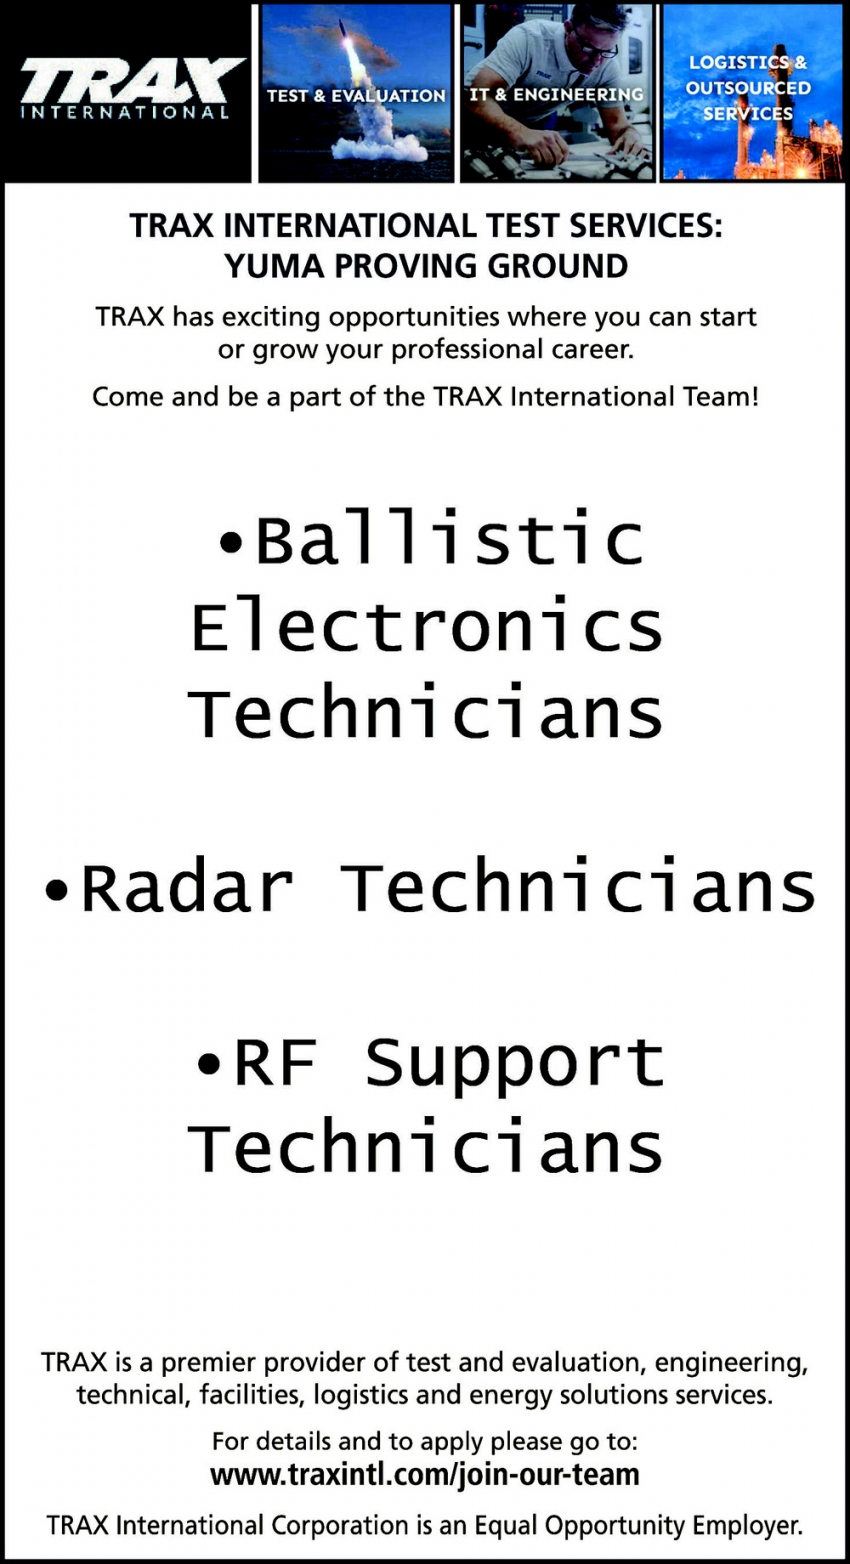 Ballistic Electronics Technicians